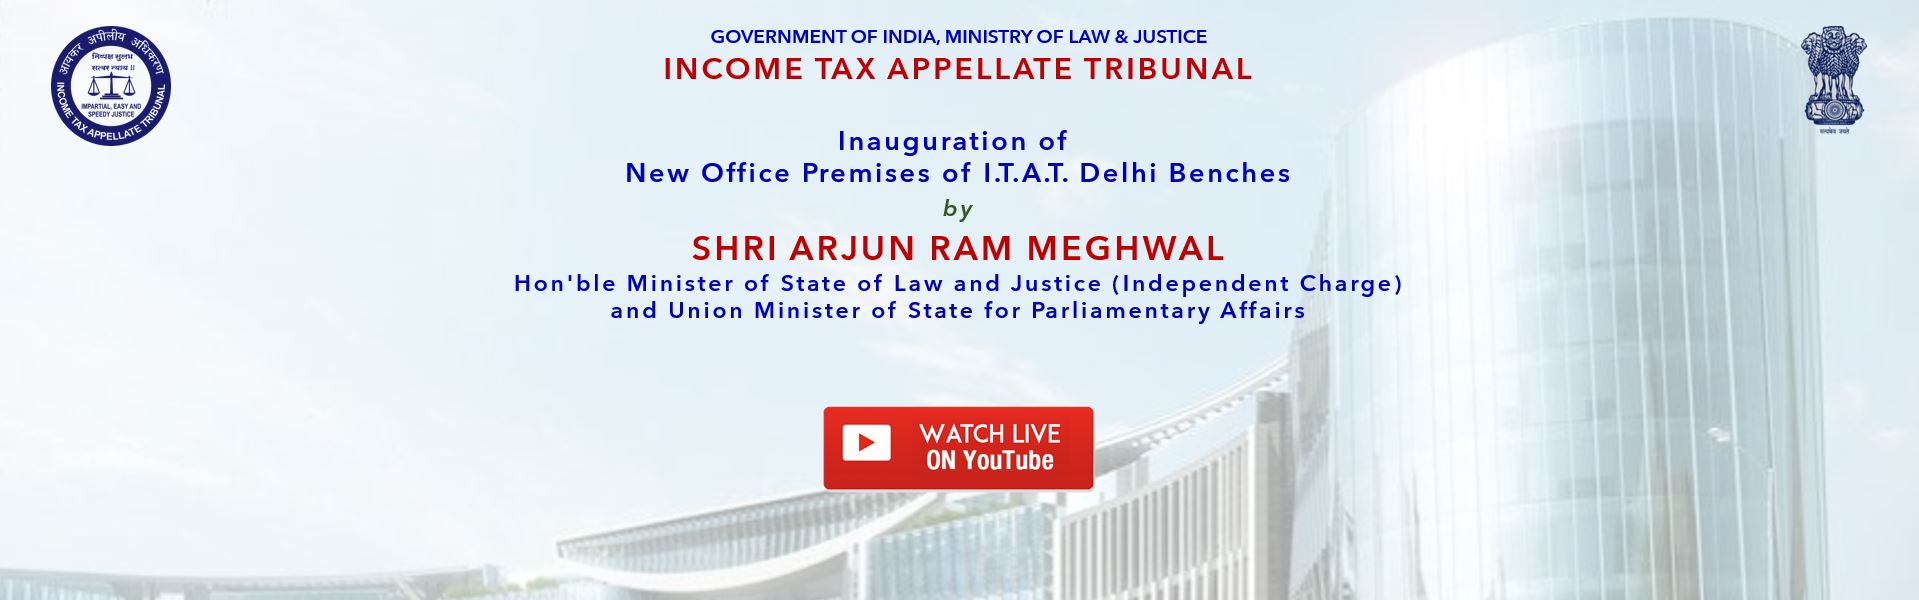 Inauguration of new Office Premises of ITAT, Delhi Benches by Shri Arjun Ram Meghwal, Hon'ble LM
                                                                                                                                                             